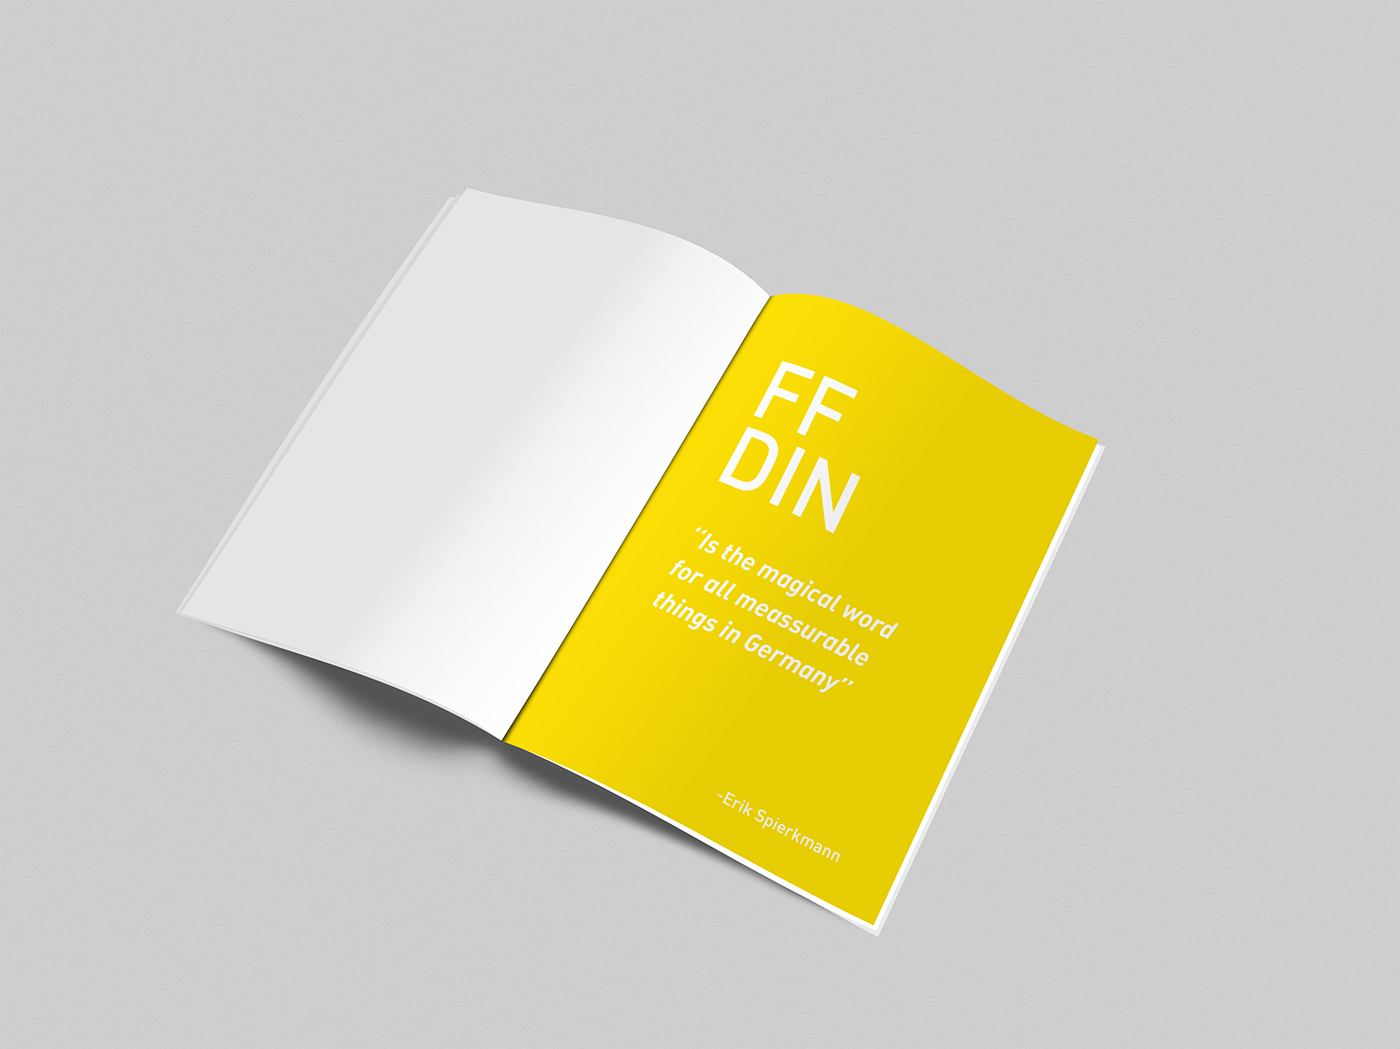 #graphicDesign #typography #college #project #manual #din #ffdin #editorial #Design #MondrianBased #DeStjilBased